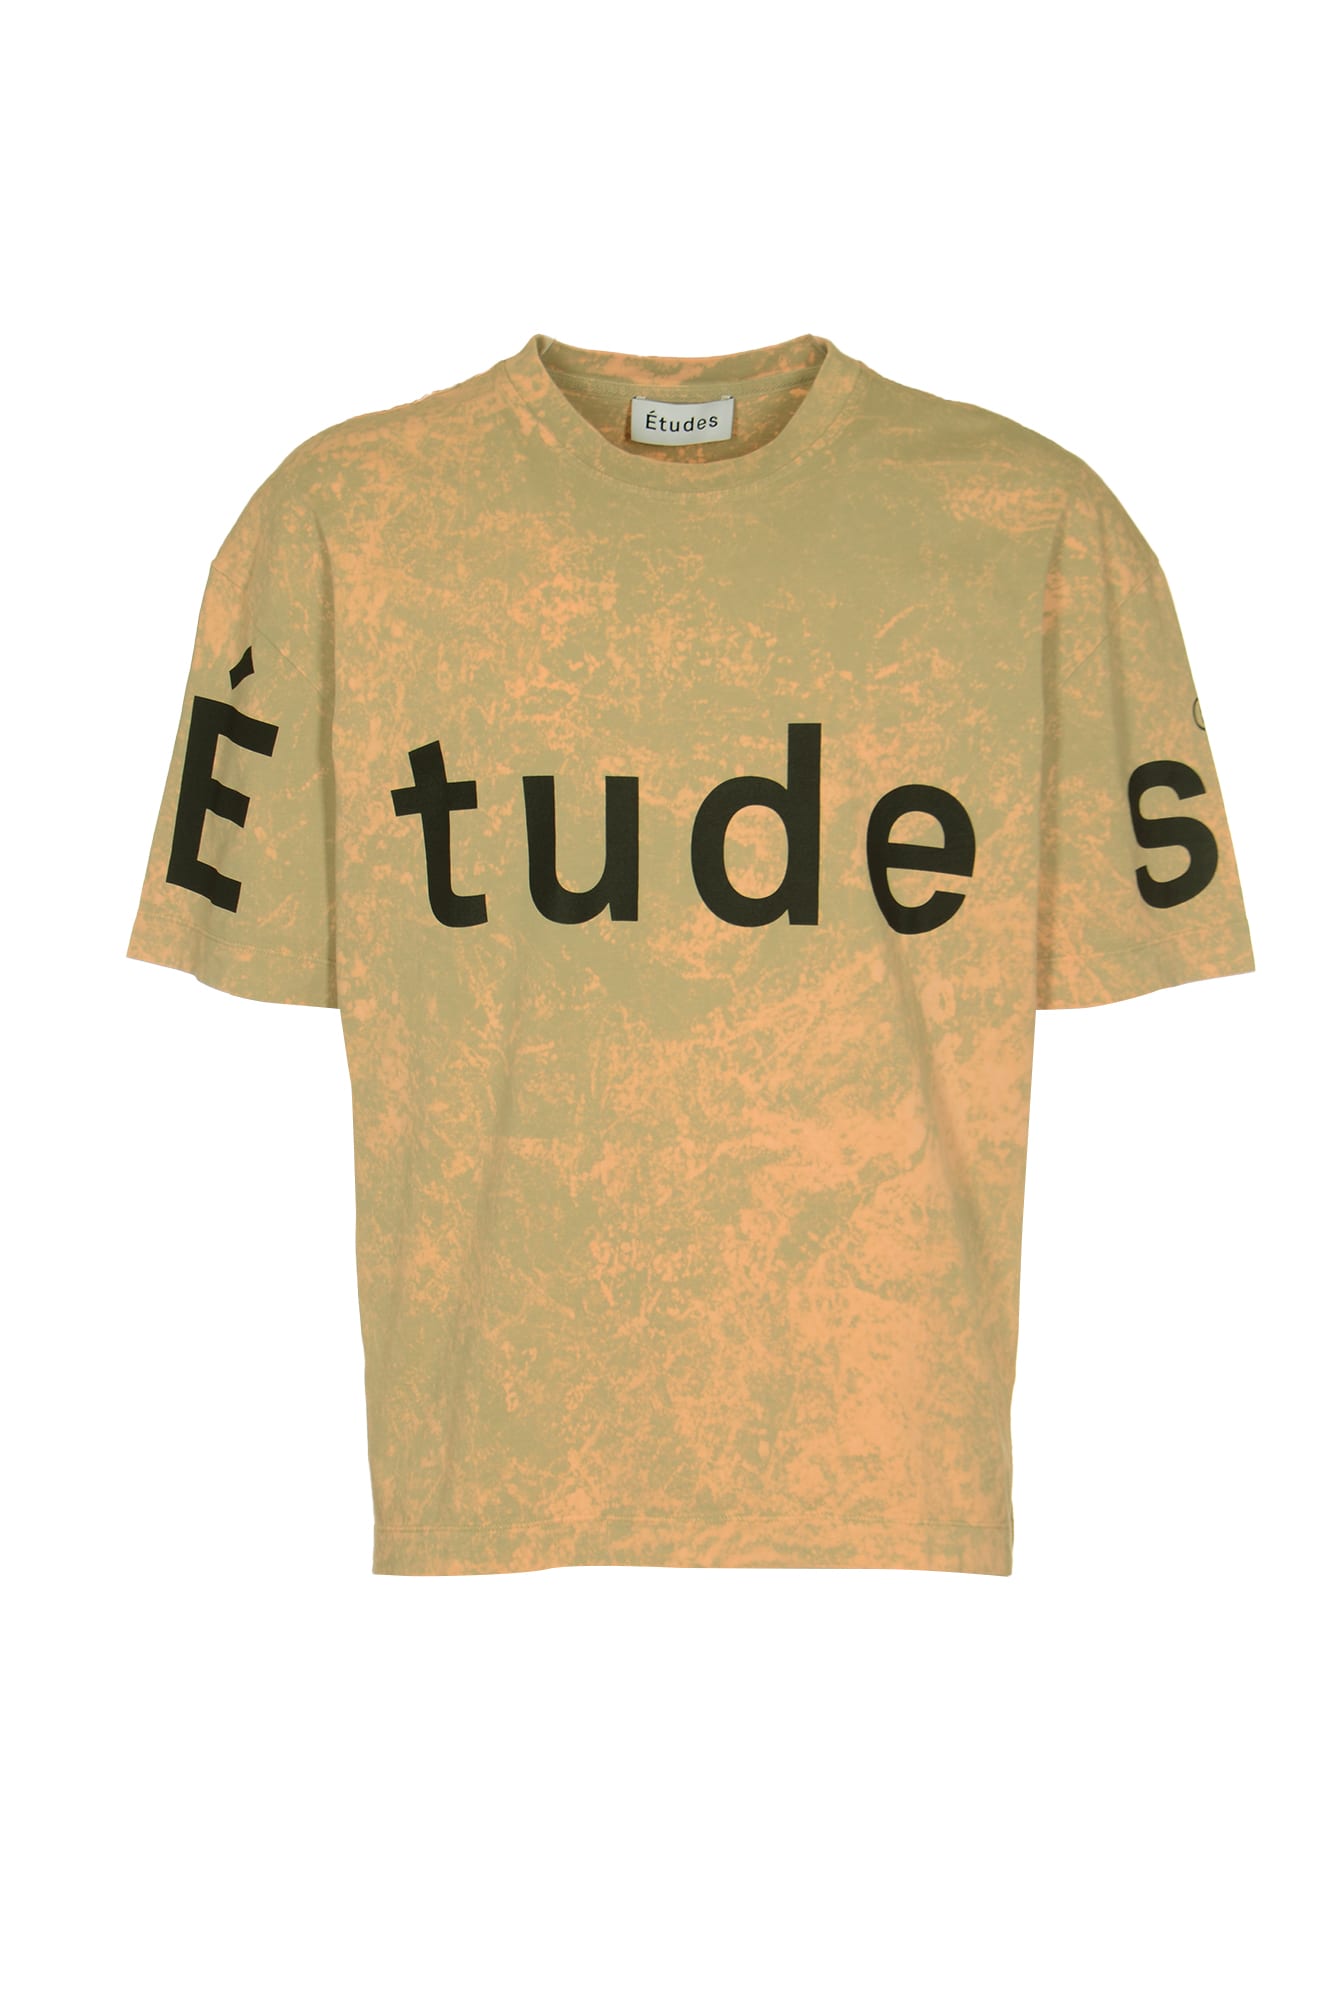 Études Logo T-shirt